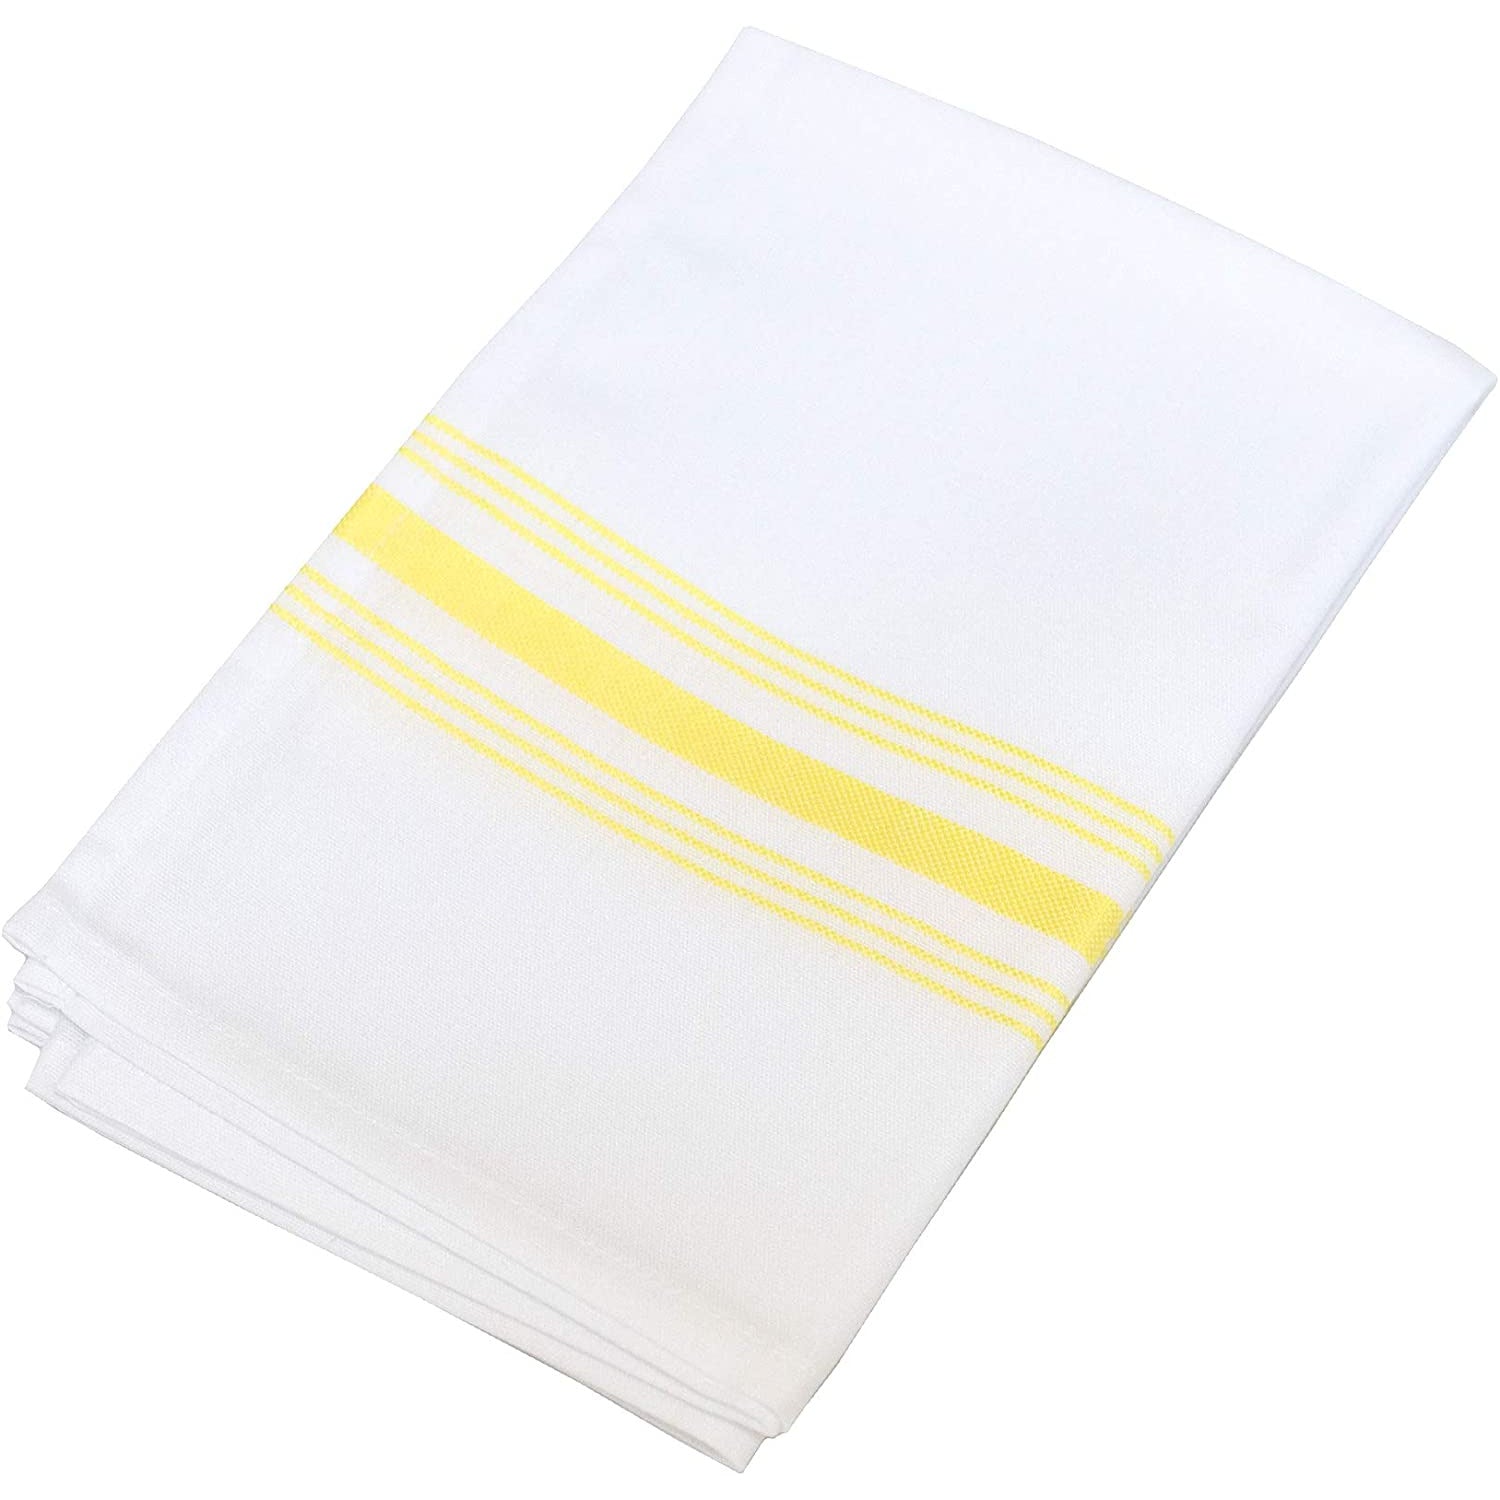 Milliken Signature Stripe Bistro Napkins - Assorted Colors - Set of 12 (Yellow)